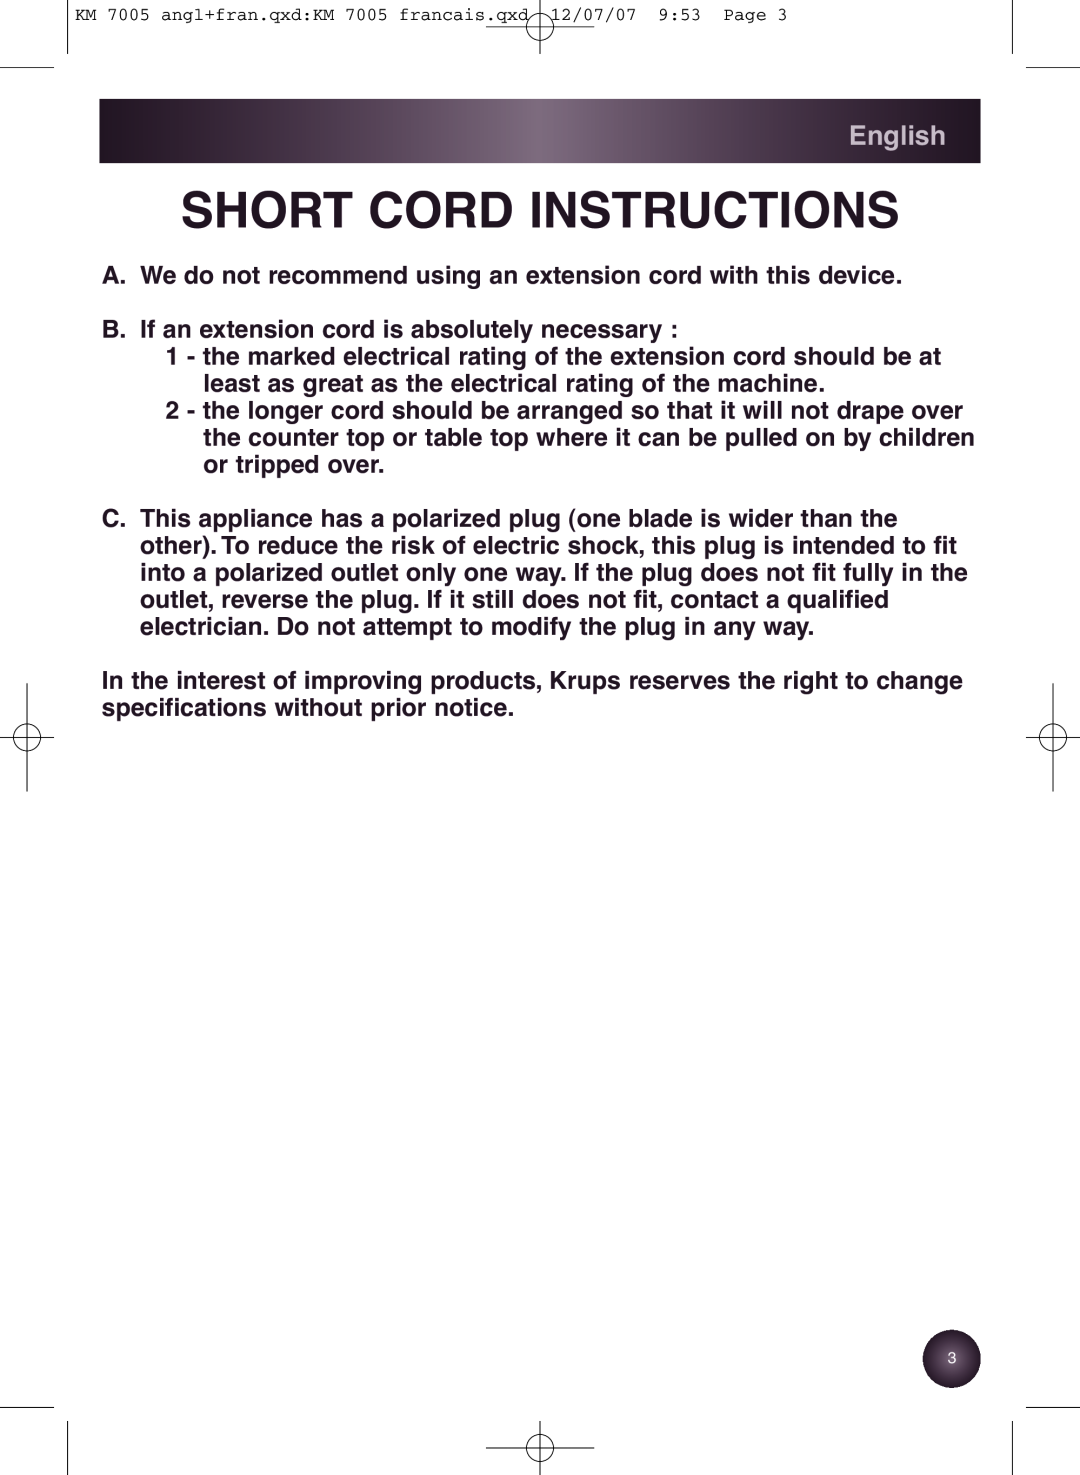 Krups KM7000 manual Short Cord Instructions, English 